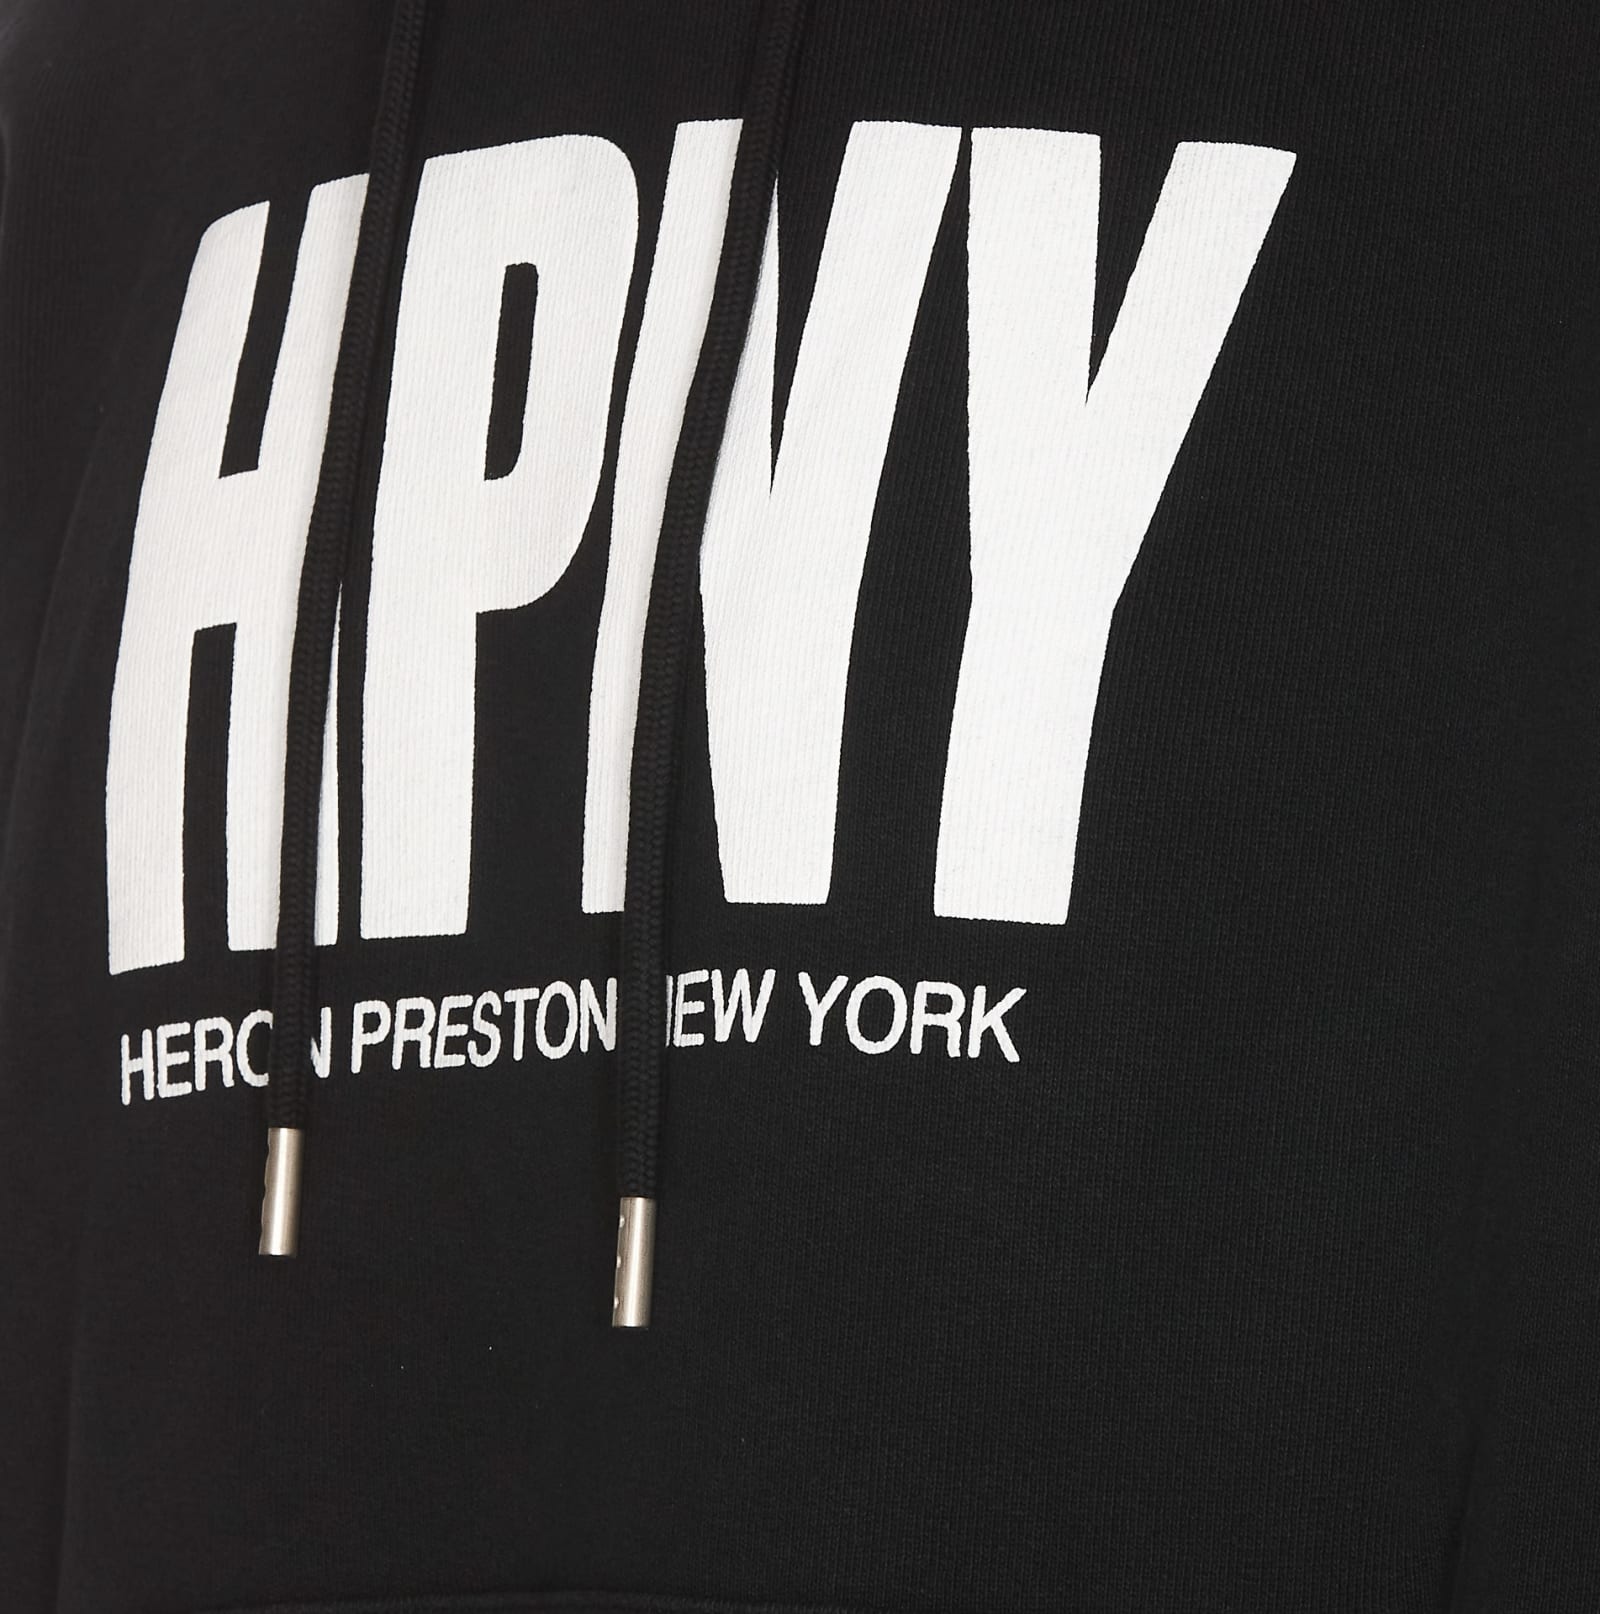 Shop Heron Preston Hpny Logo Hoodie